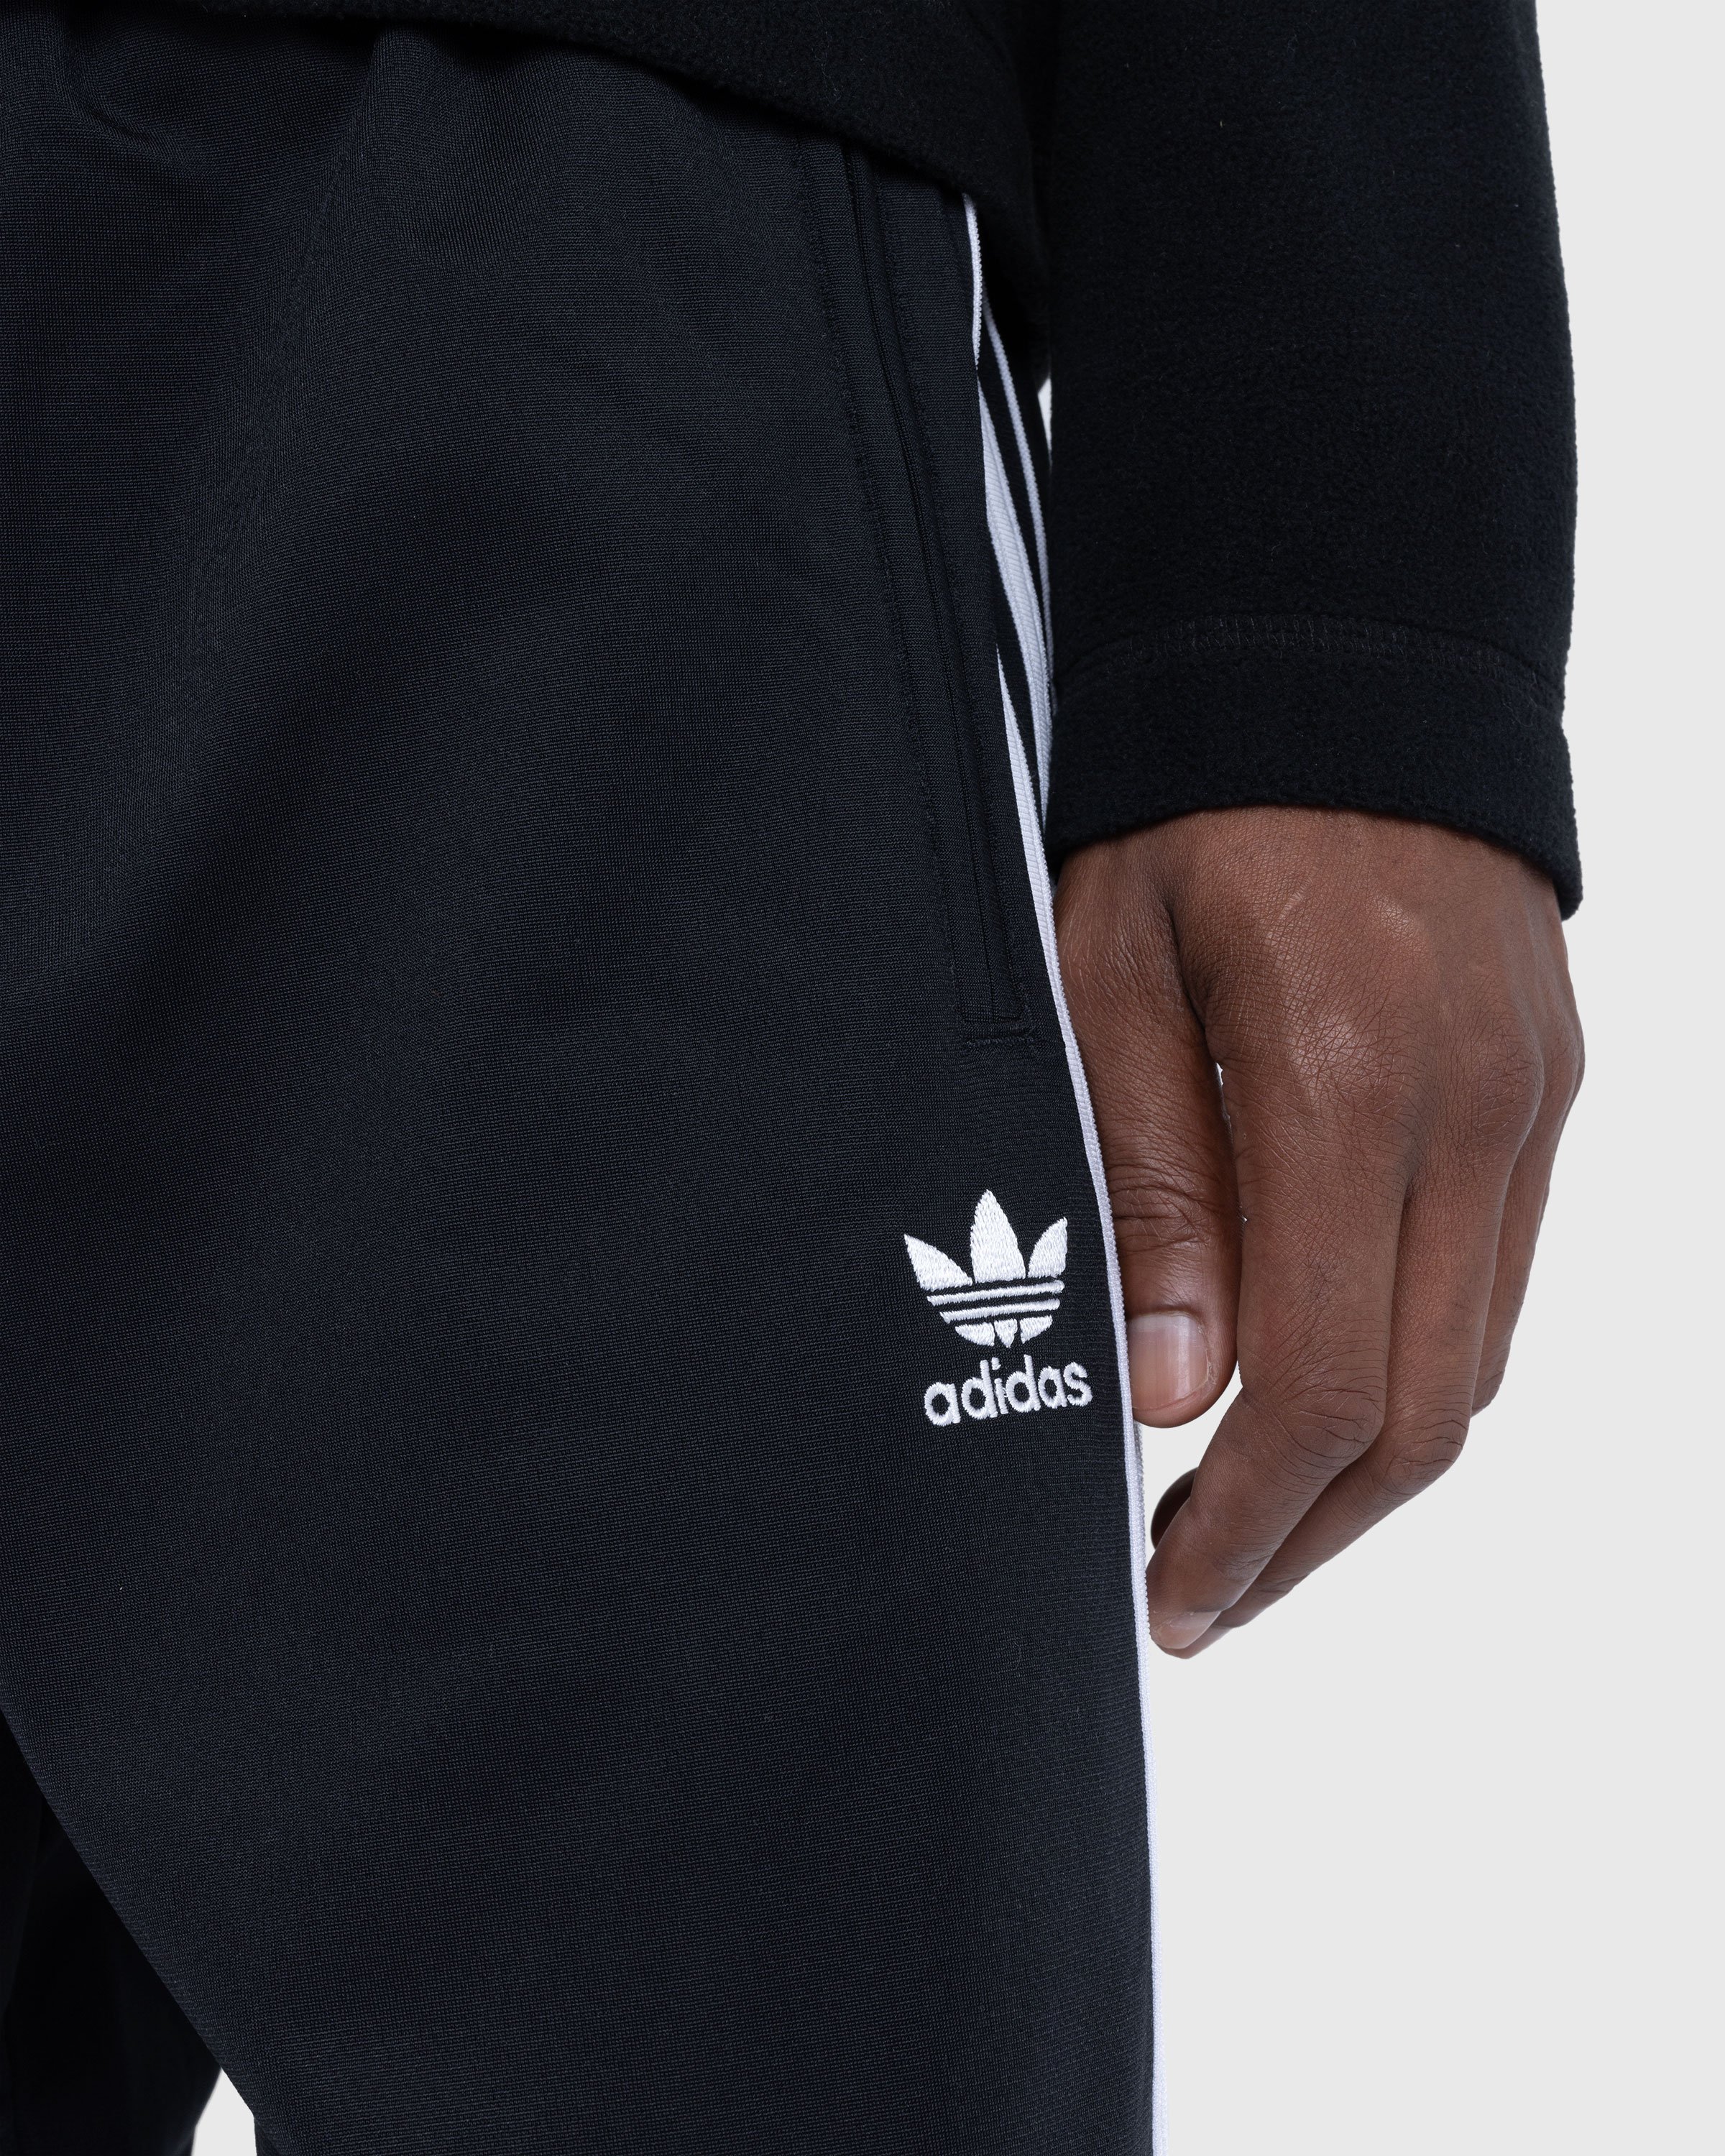 Adidas – Firebird Track Pants Black/White | Highsnobiety Shop